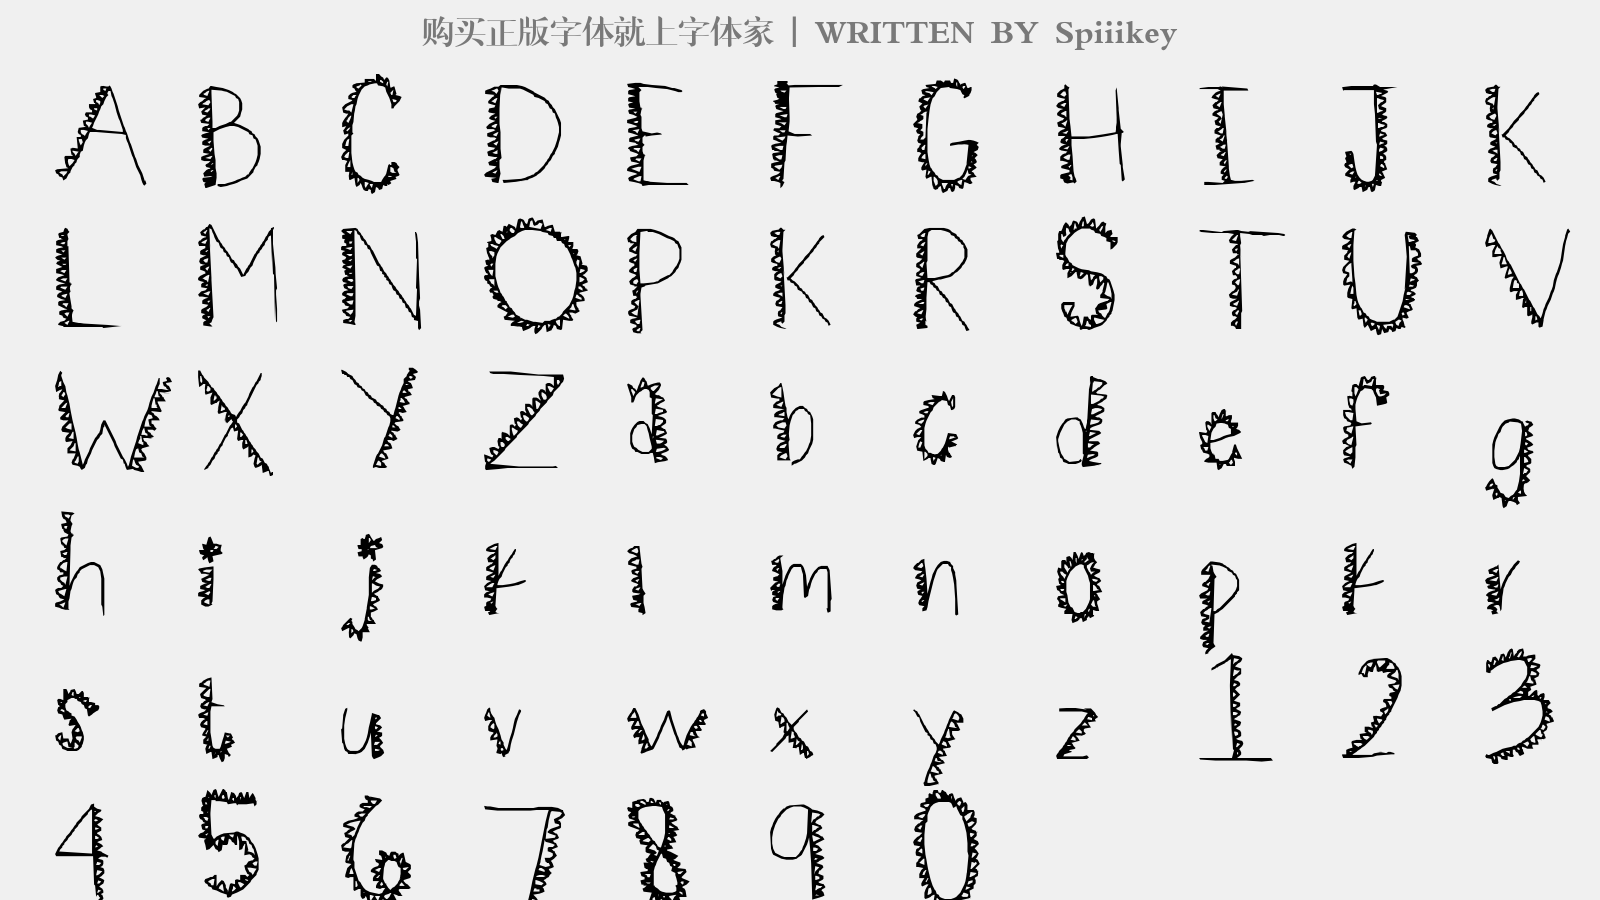 Spiiikey - 大写字母/小写字母/数字